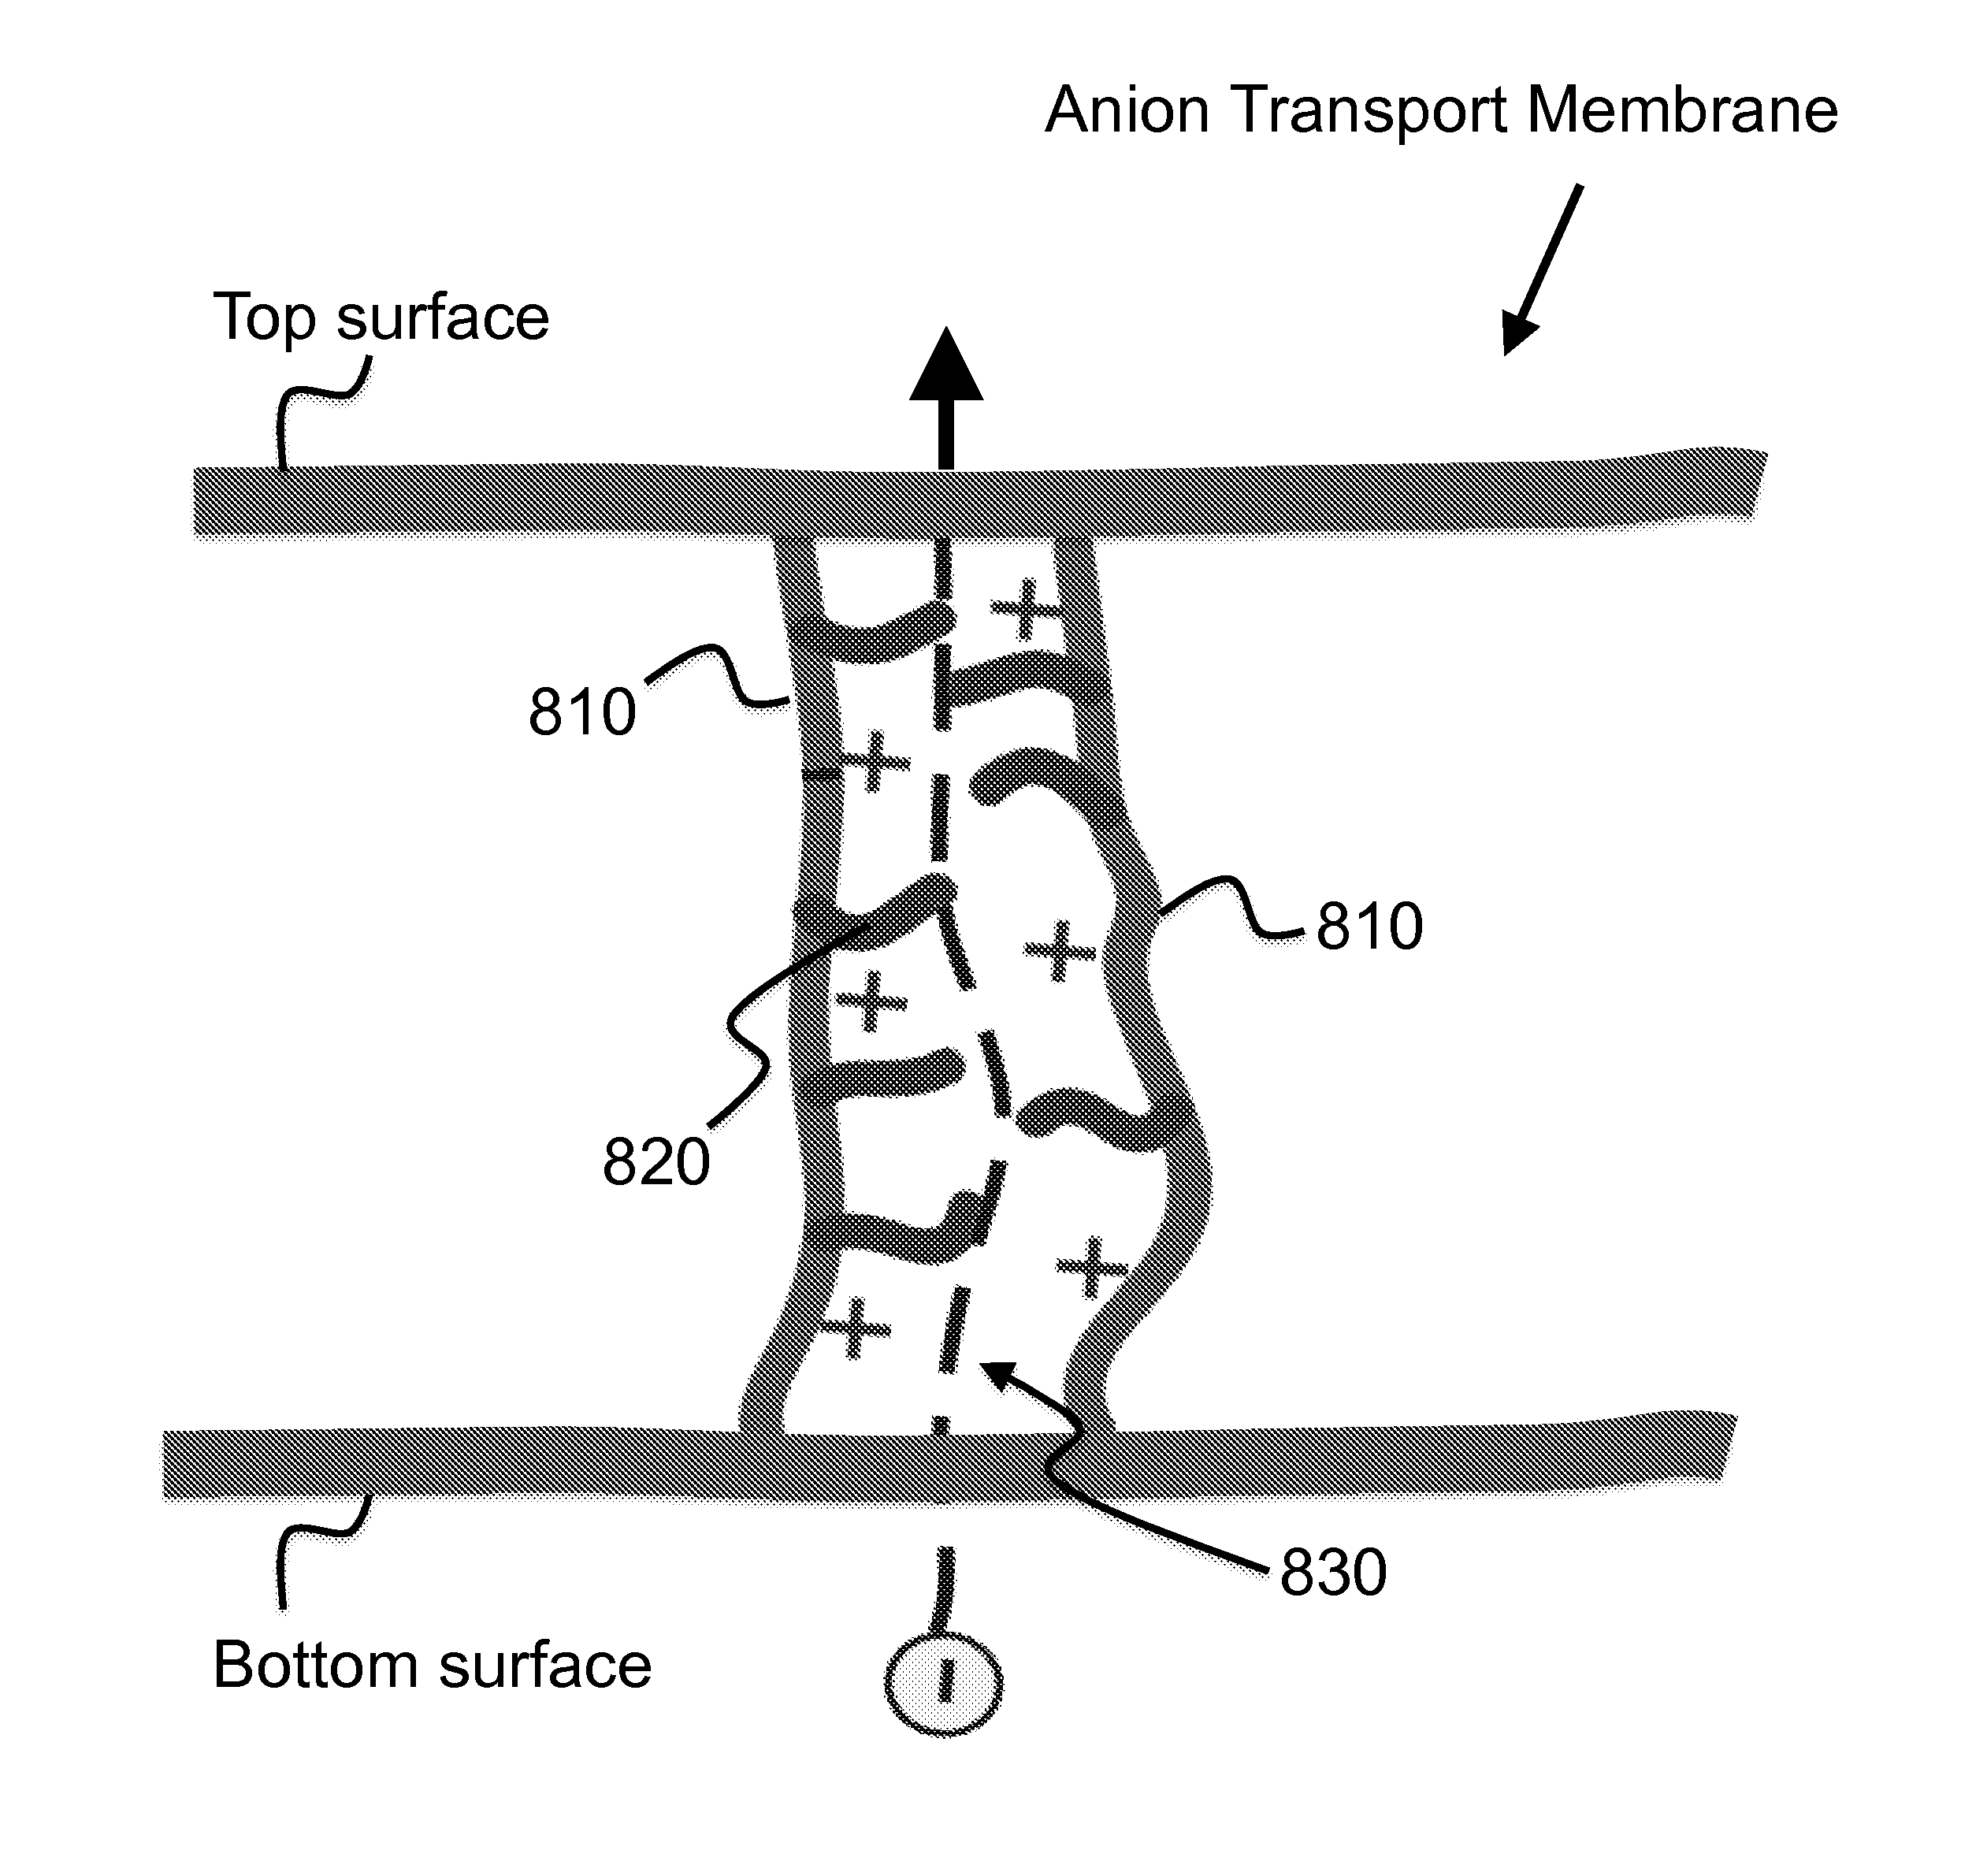 Anion Transport Membrane